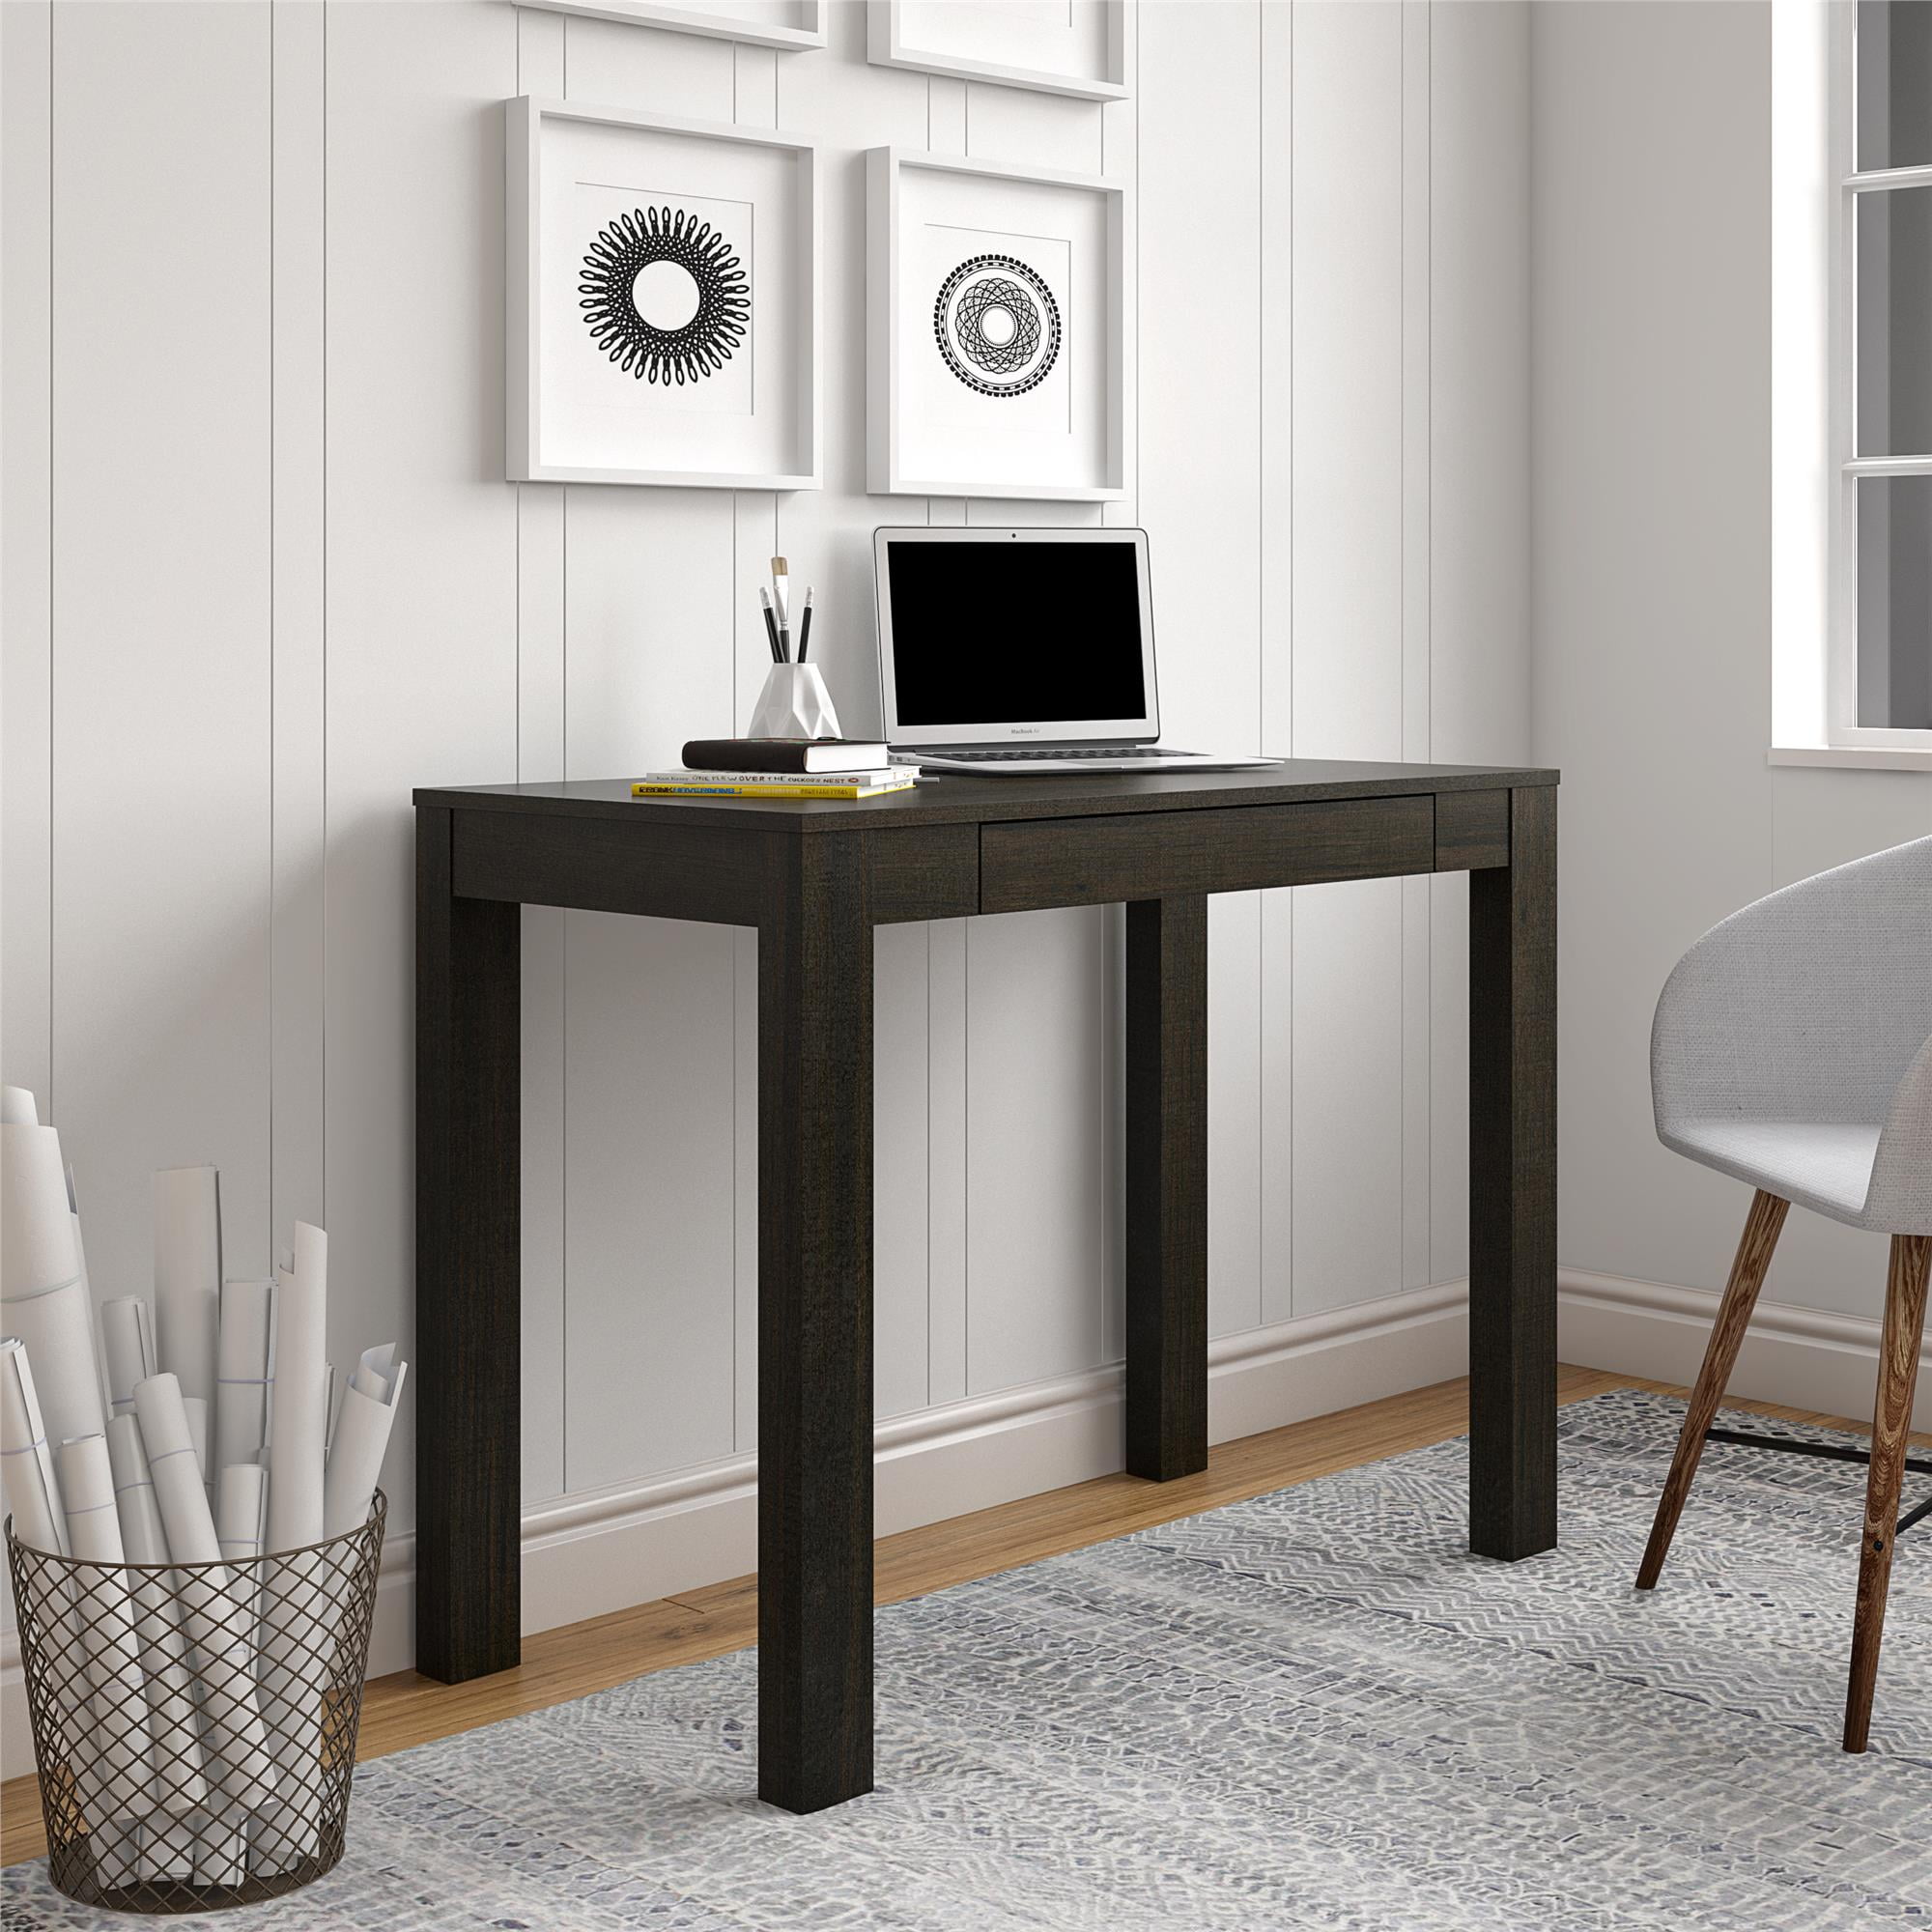 Mainstays Parsons Office Living Room Desk, Espresso Finish - 2